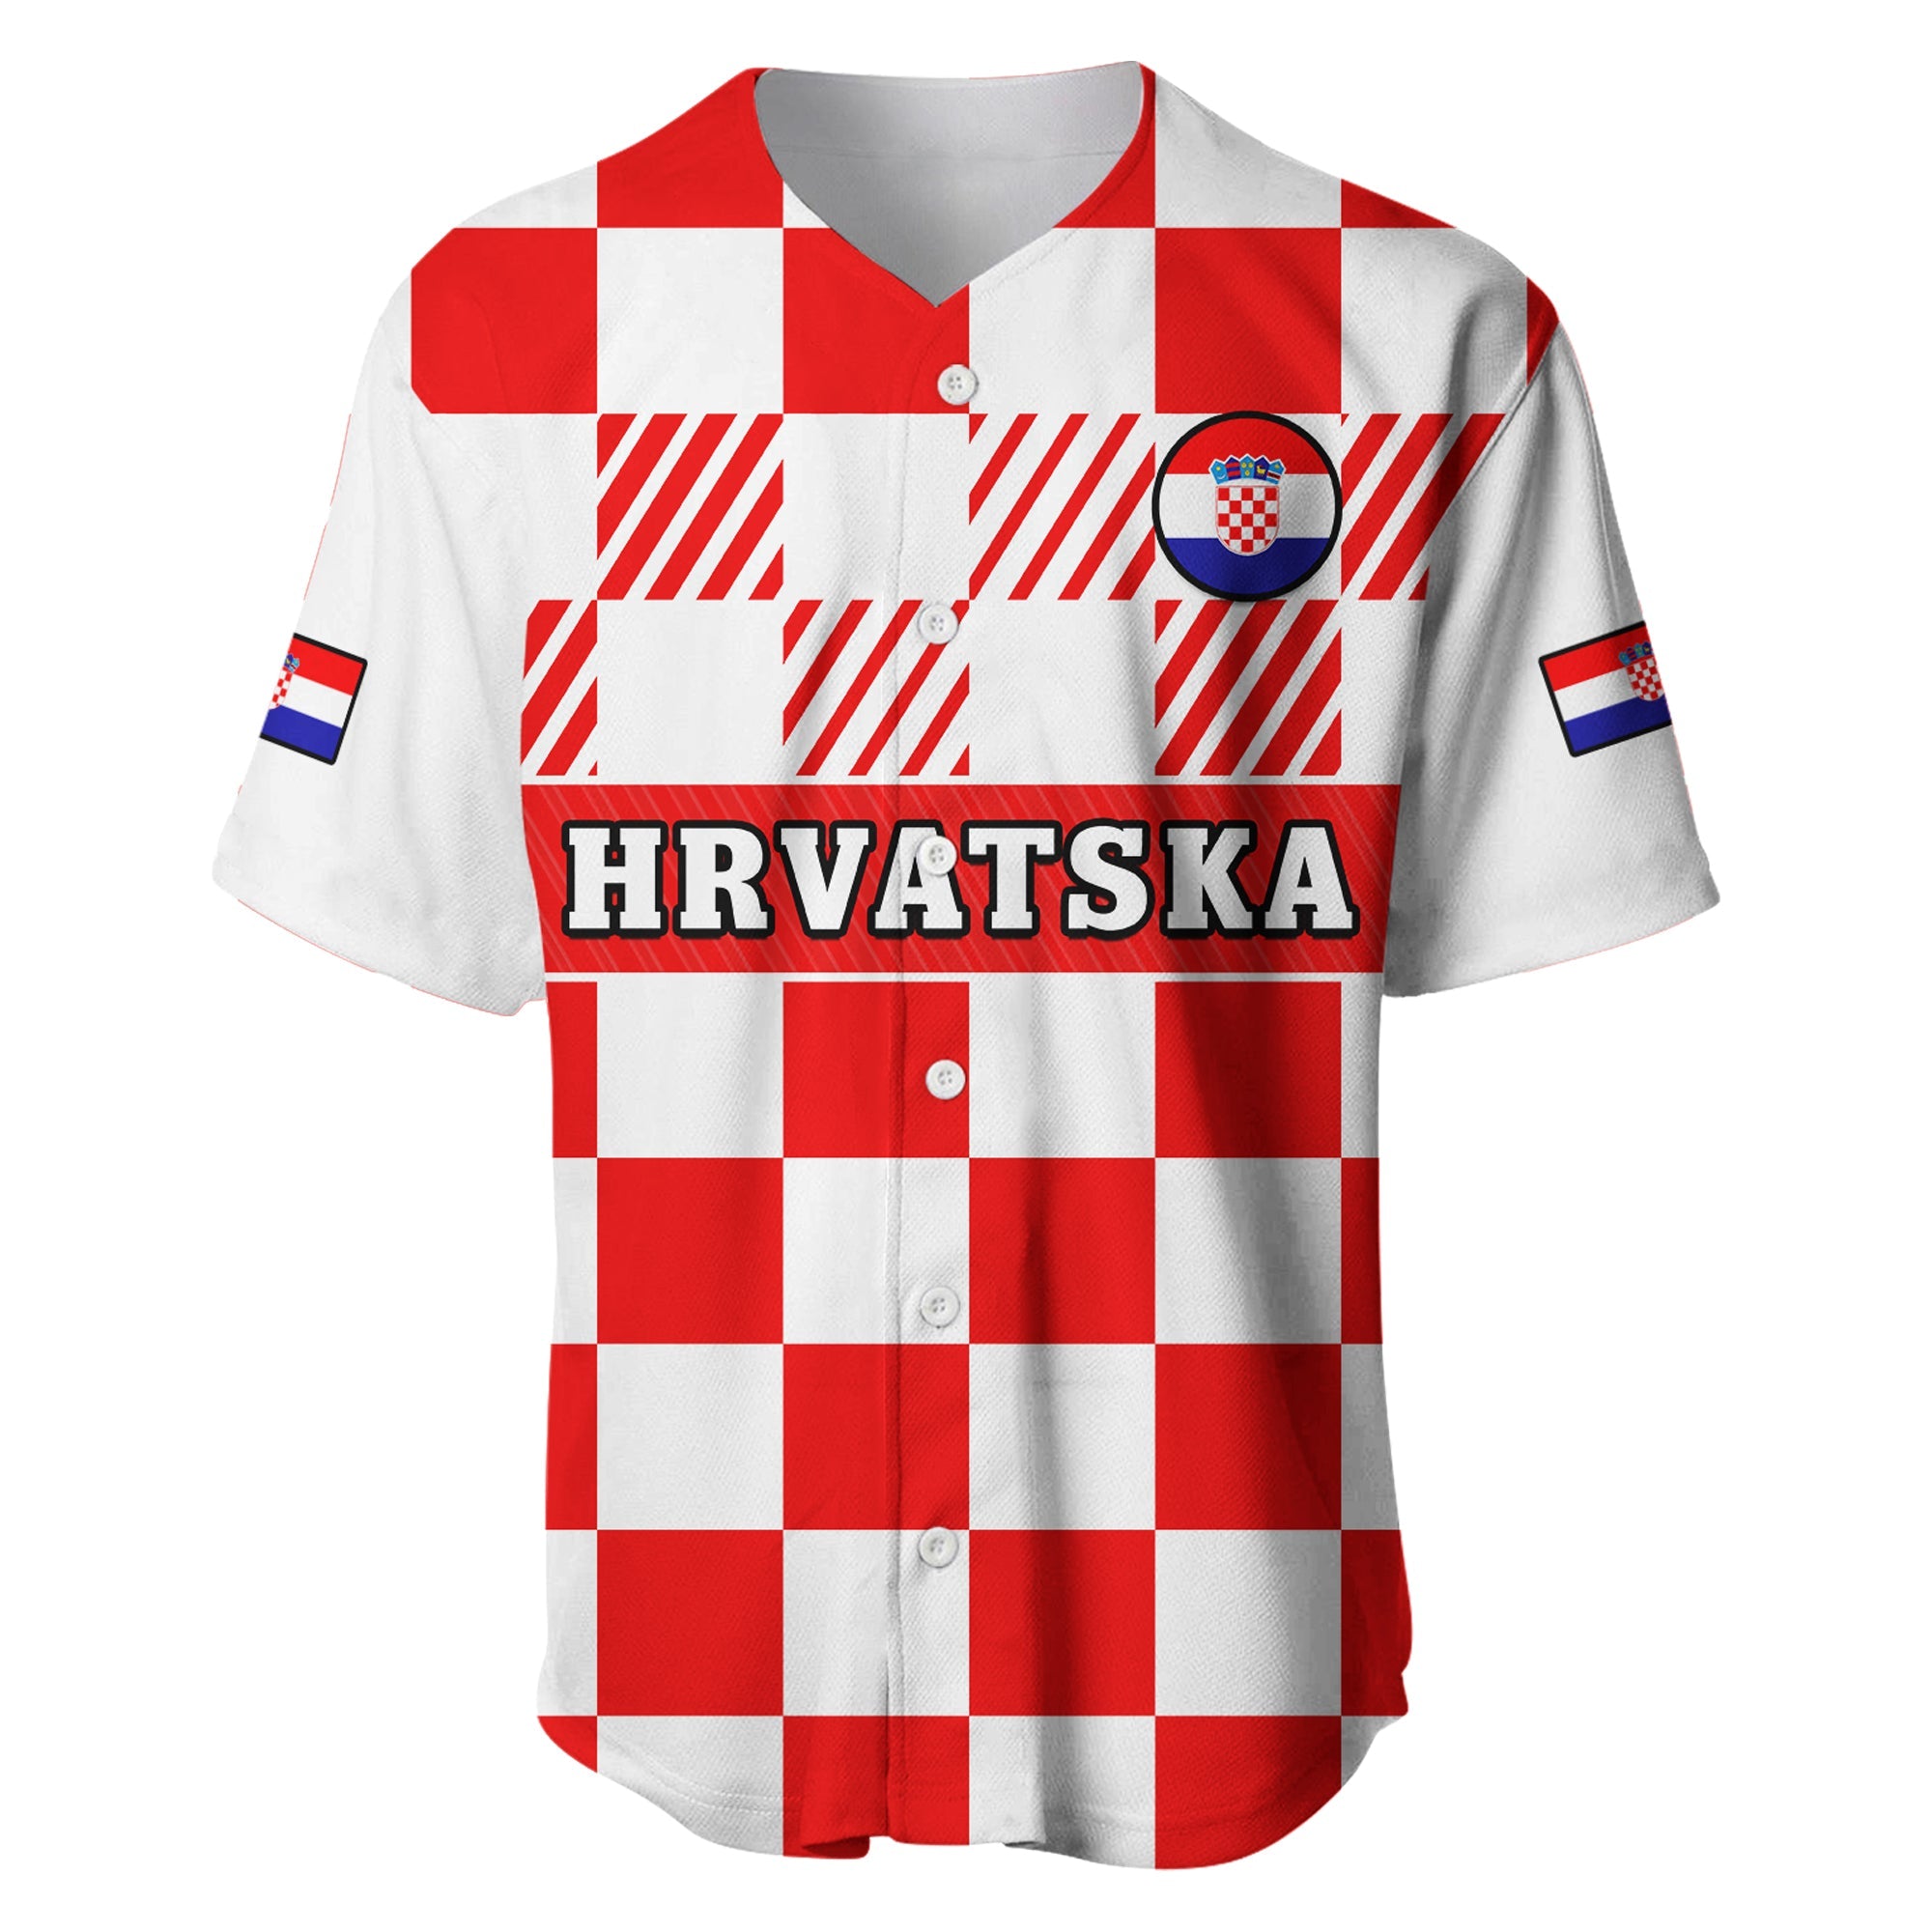 croatia-football-baseball-jersey-hrvatska-checkerboard-red-version